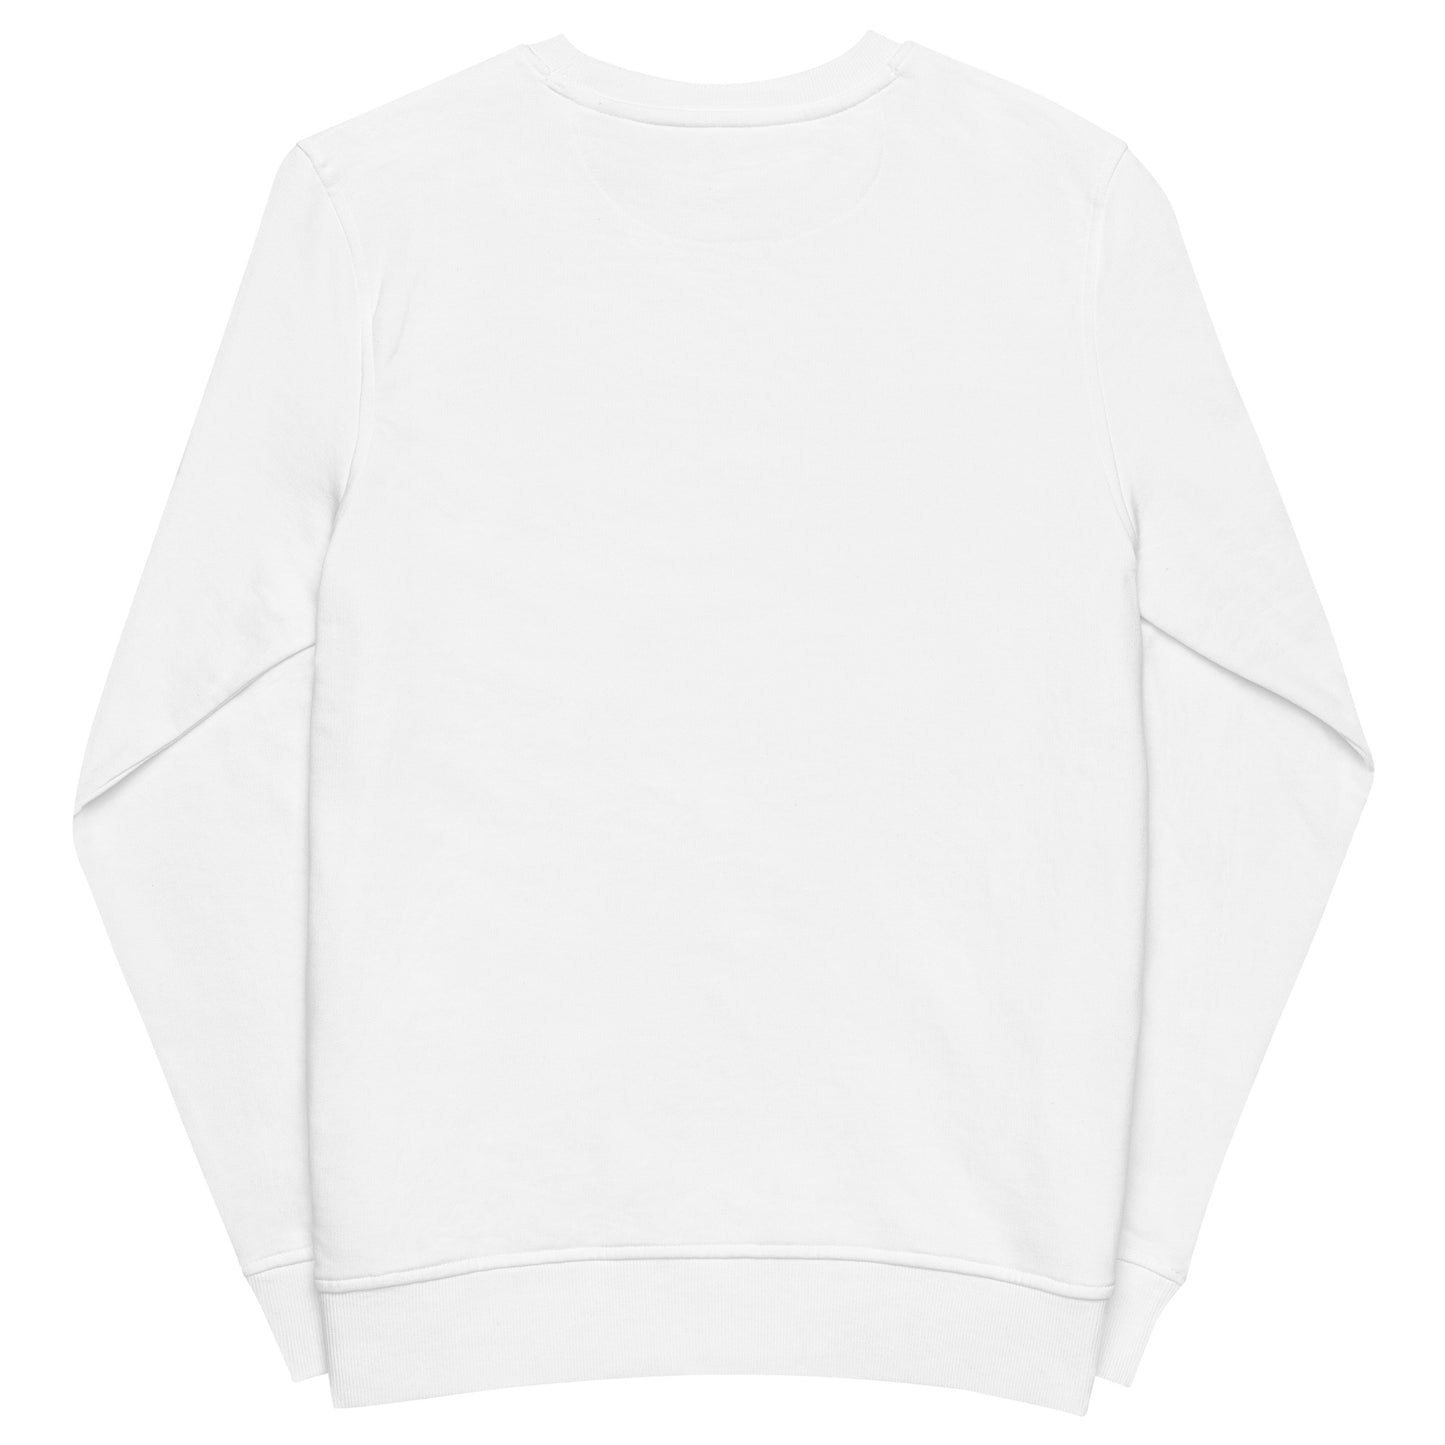 Sweatshirt eco-friendly